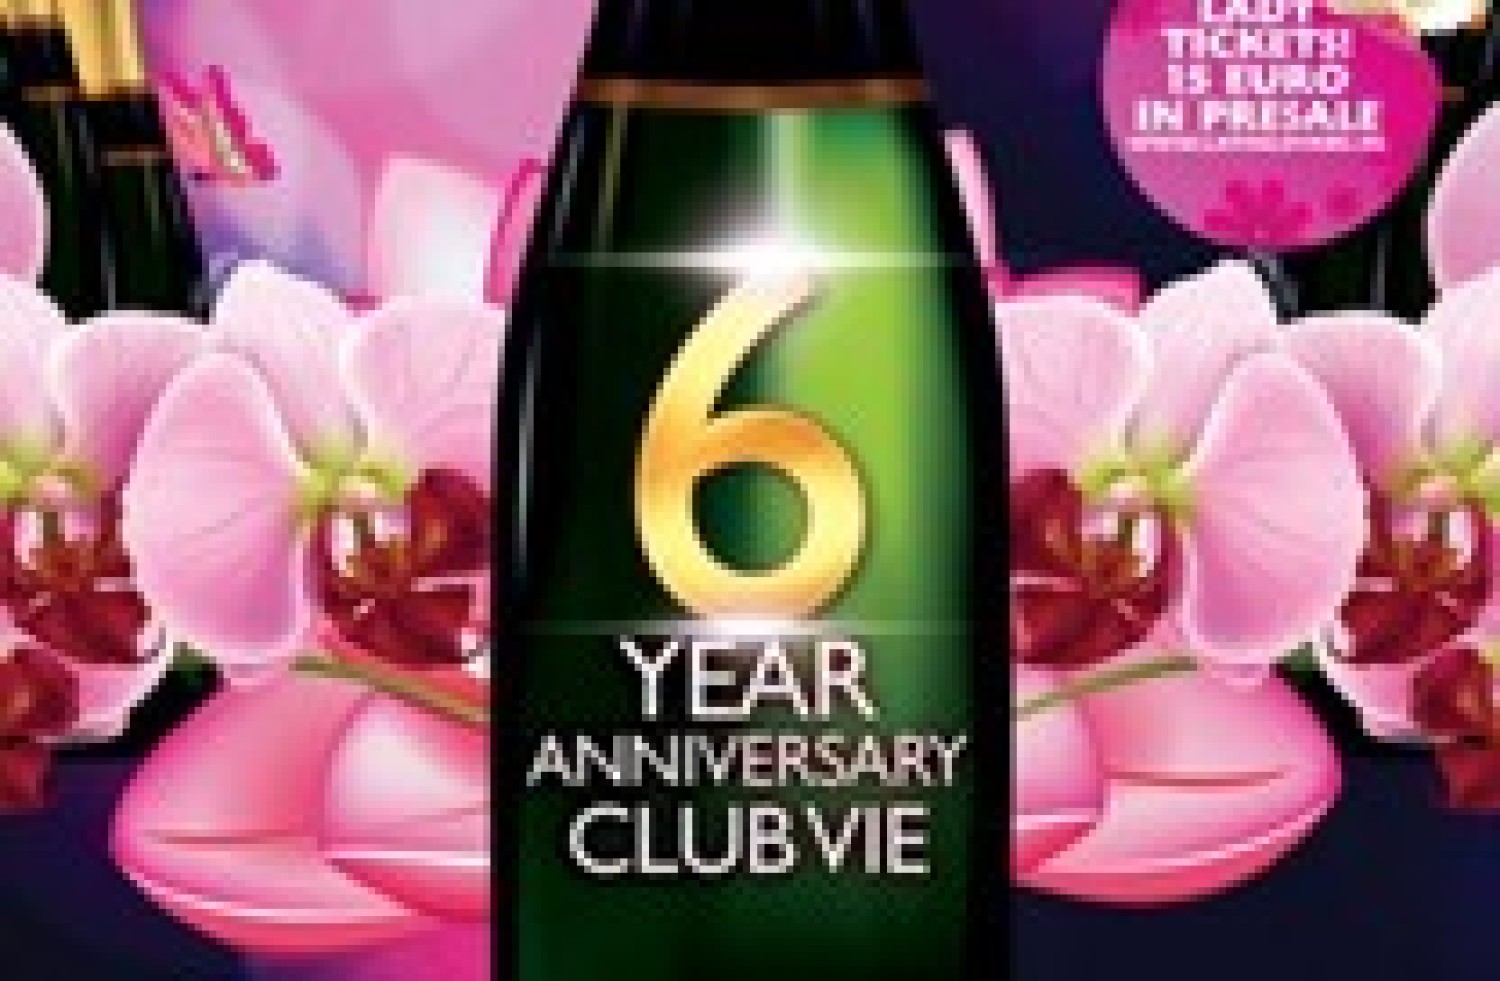 Party nieuws: Club Vie bestaat aankomend weekend 6 jaar!